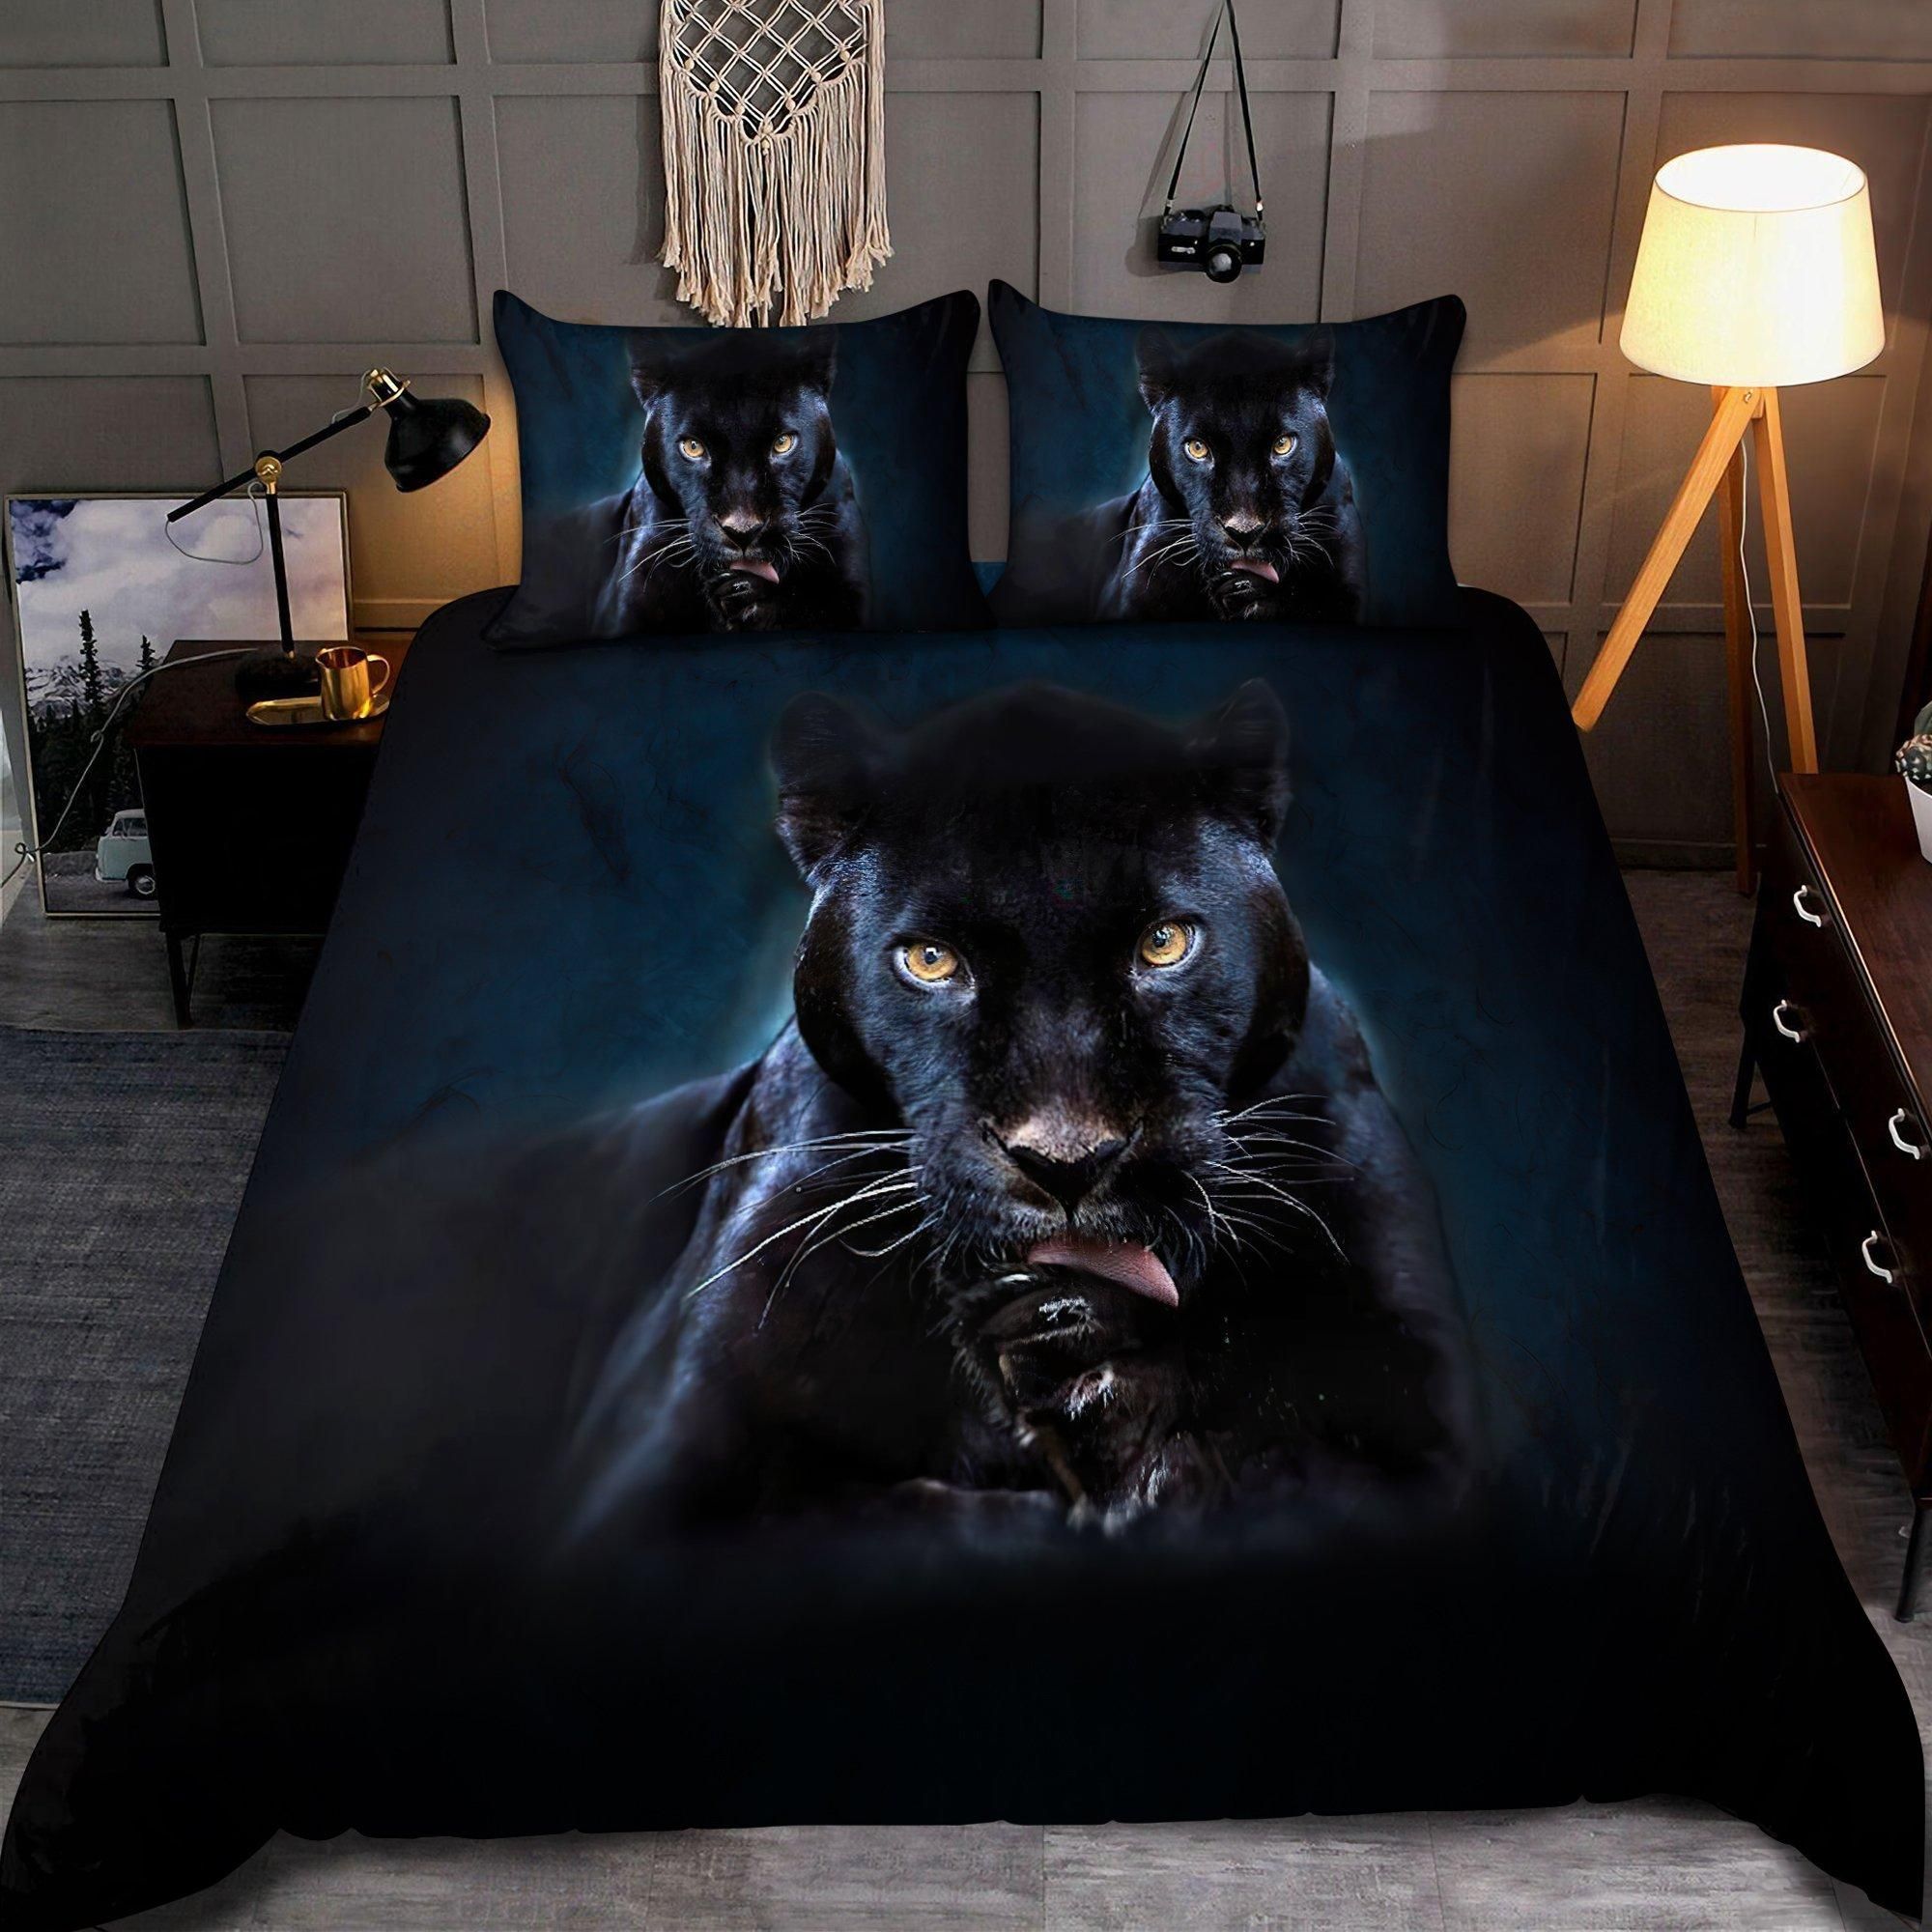 The Black Panther Bedding Duvet Cover Bedding Set